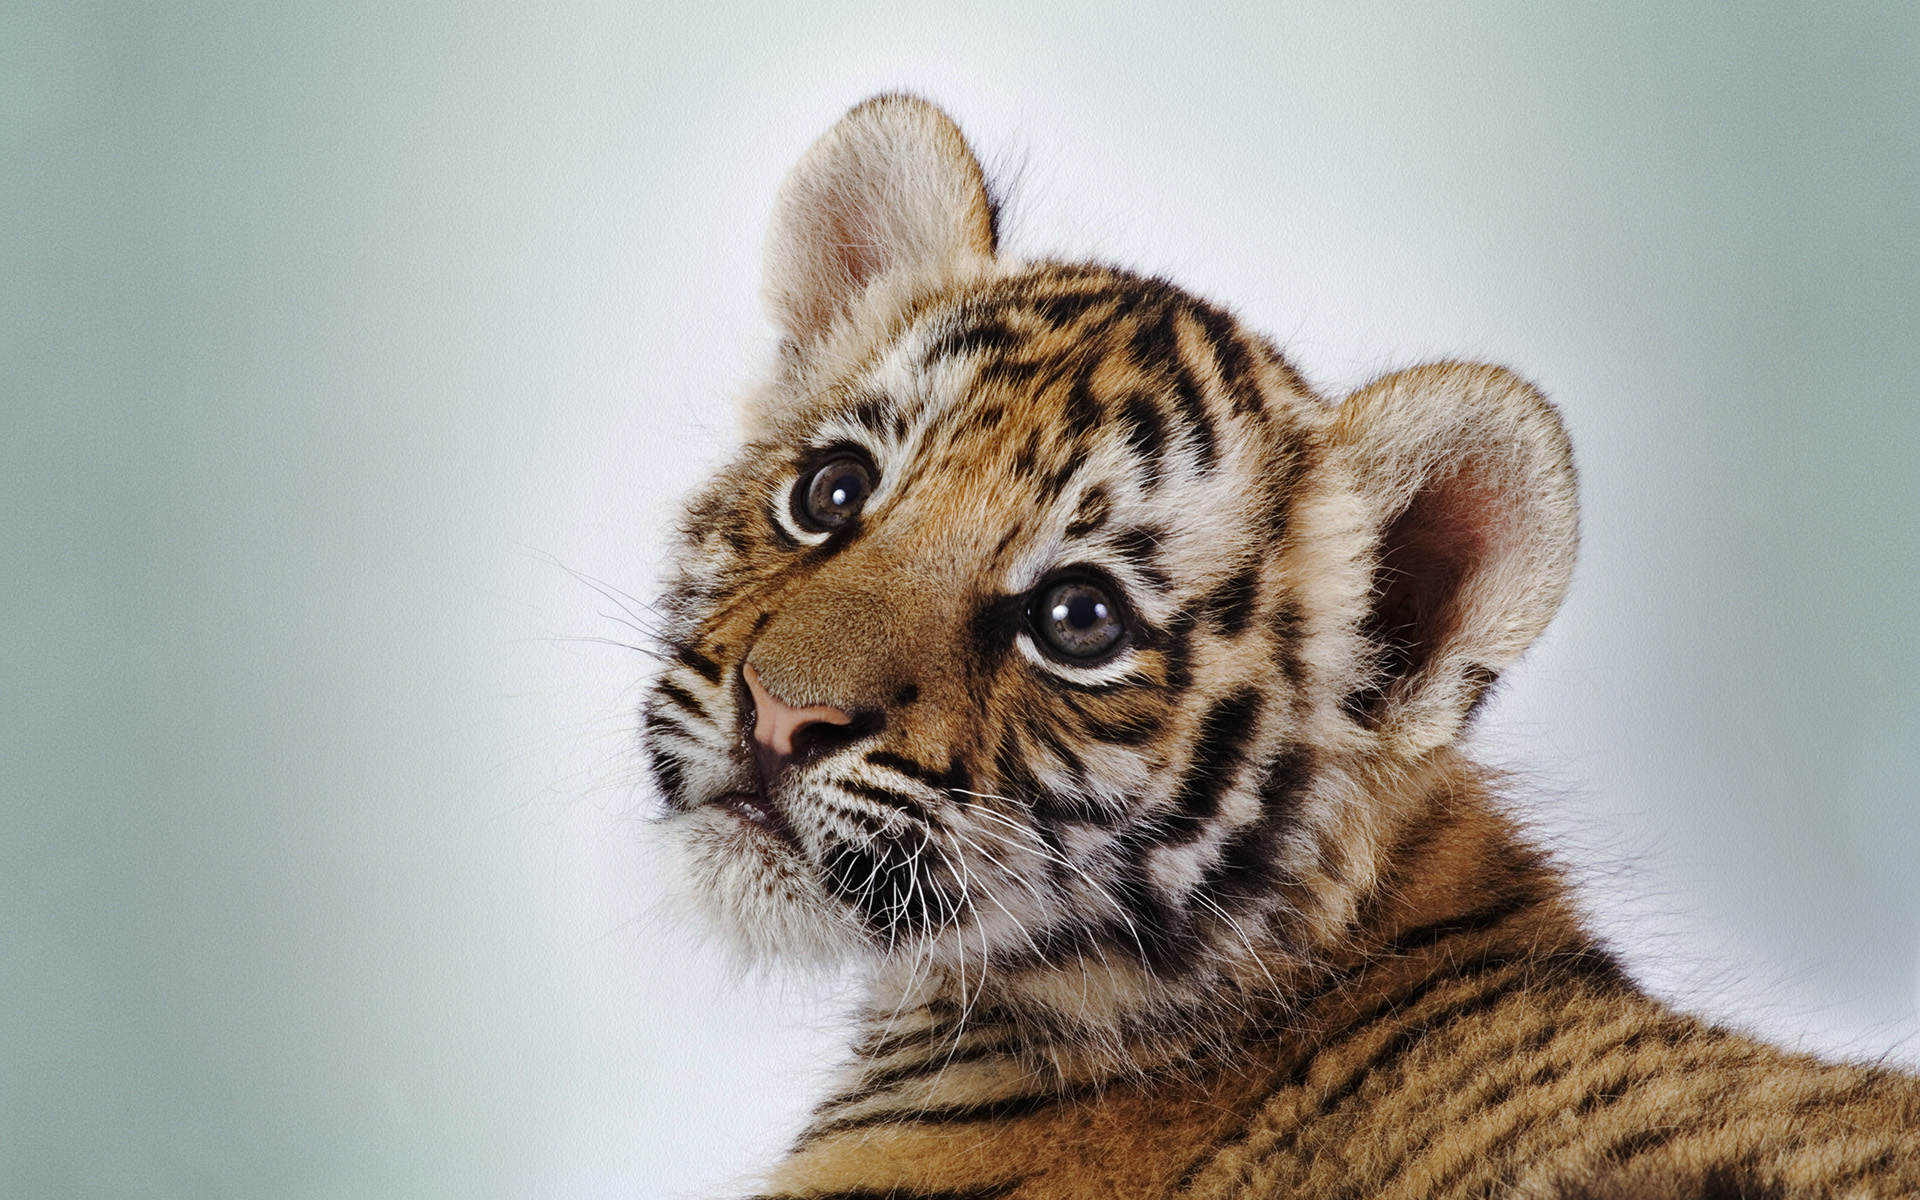 Cute Tiger Cub97419509 - Cute Tiger Cub - Tiger, Seabird, Cute